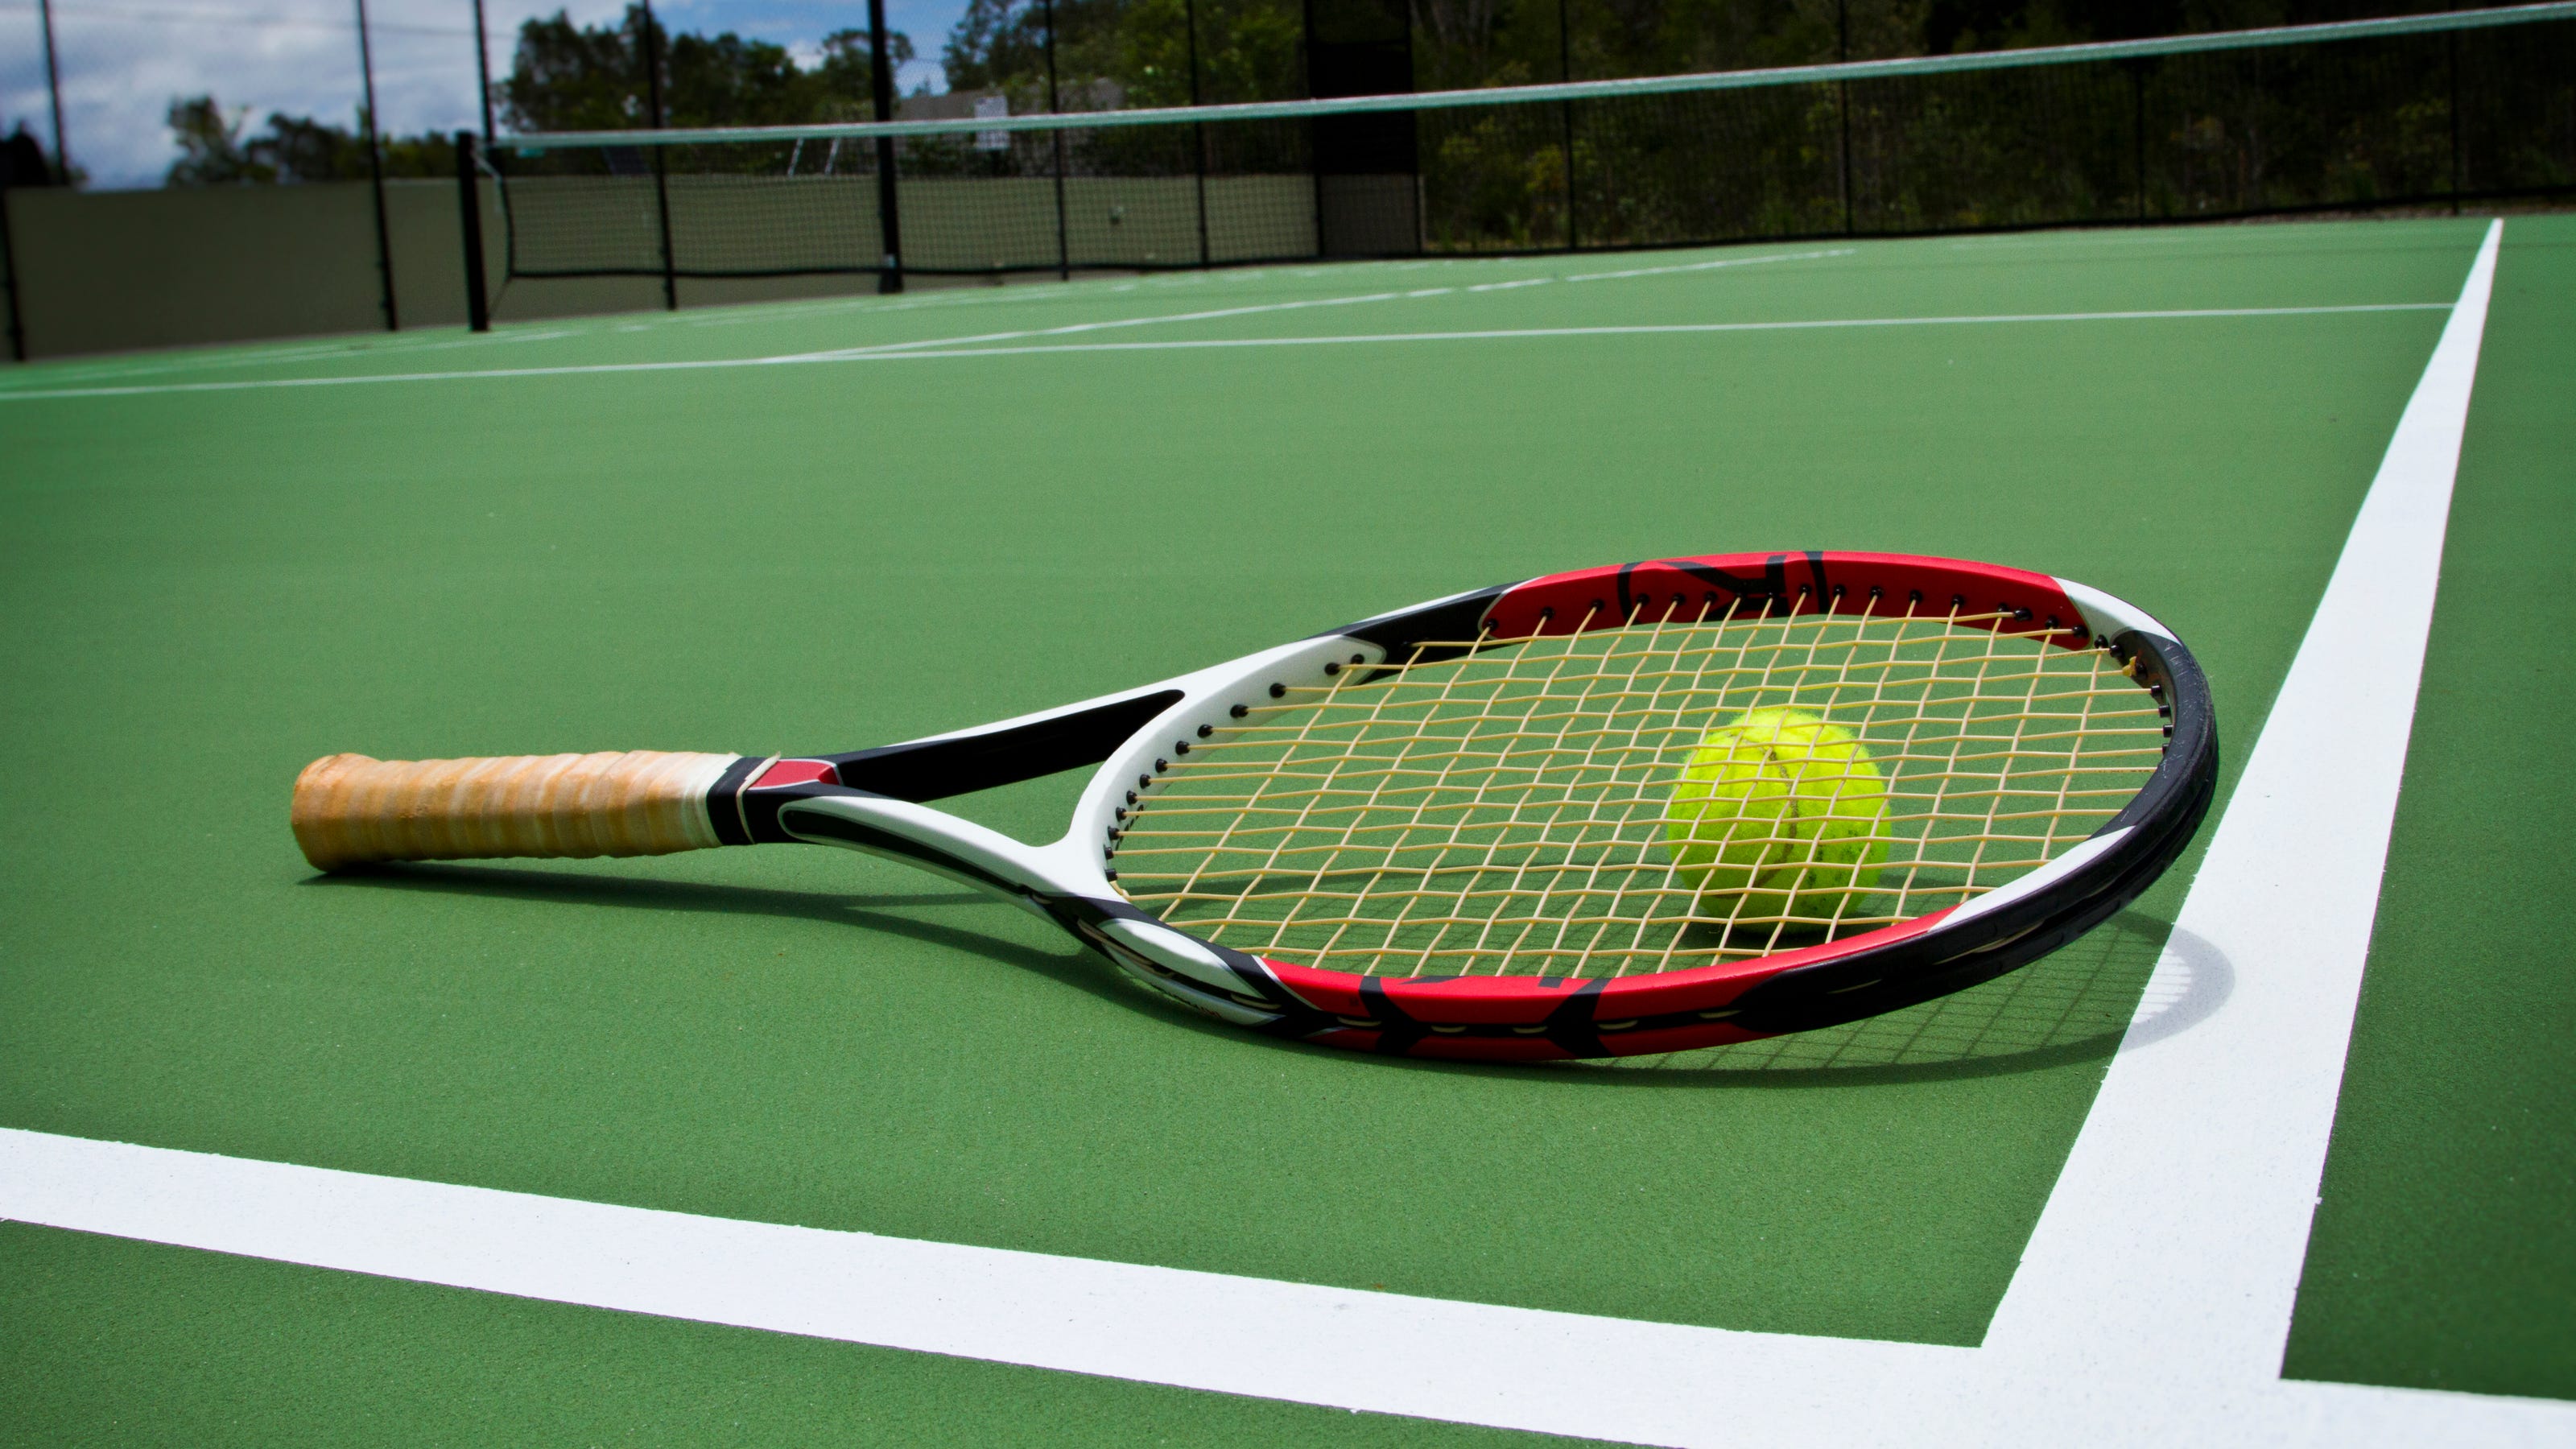 Теннисные названия. Теннис. Теннис ракетка и мяч. Ракетка для тенниса. Ракетка на теннисном корте.